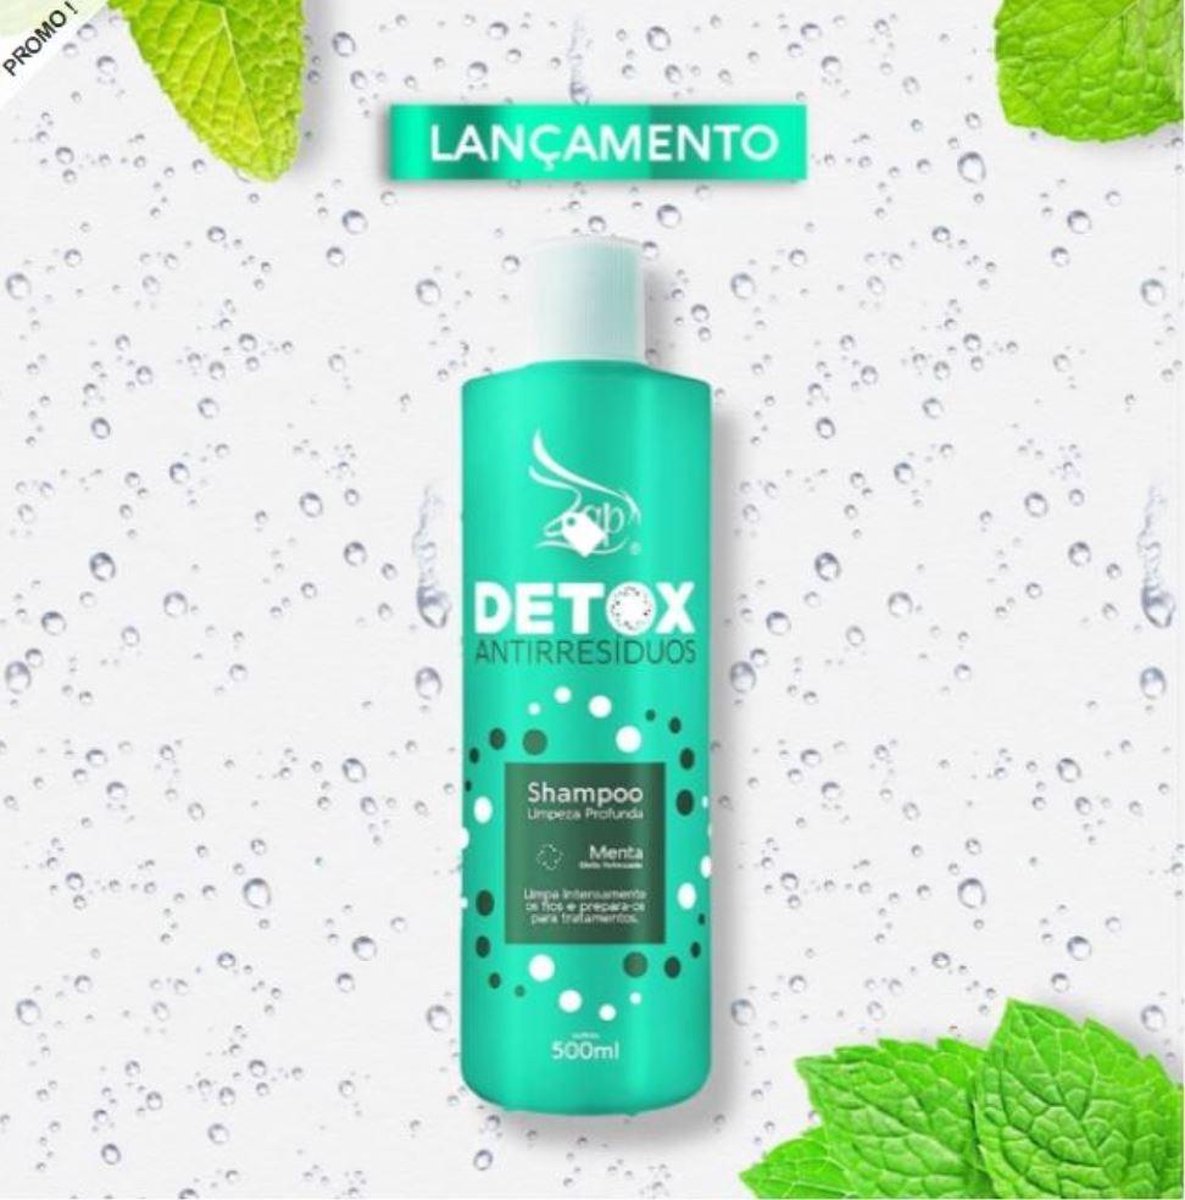 ZAP Shampoo Detox ANTIRESIDUOS Menthol + Anti Breaking Sos shower Mask 300 ml